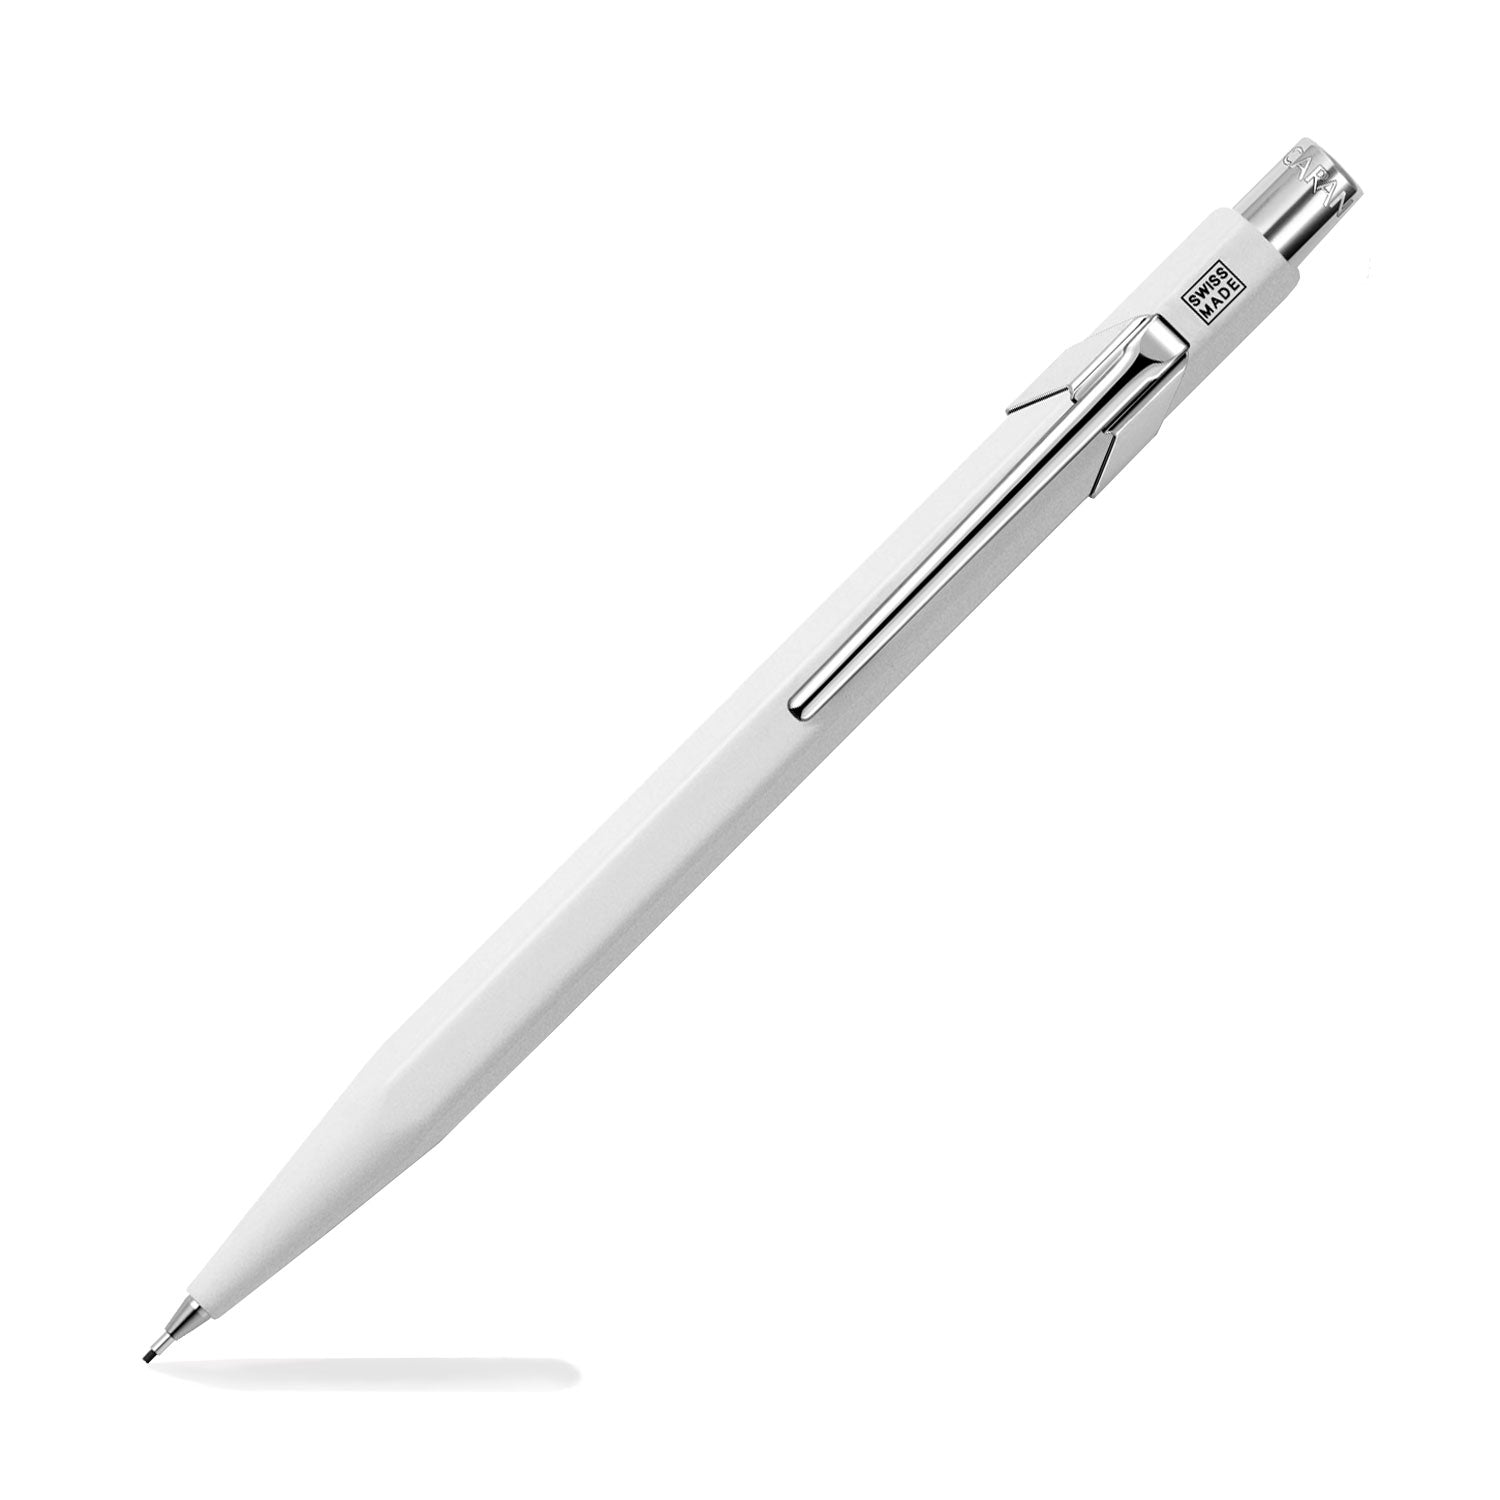 Caran d'Ache 849 Mechanical Pencil - Classic White